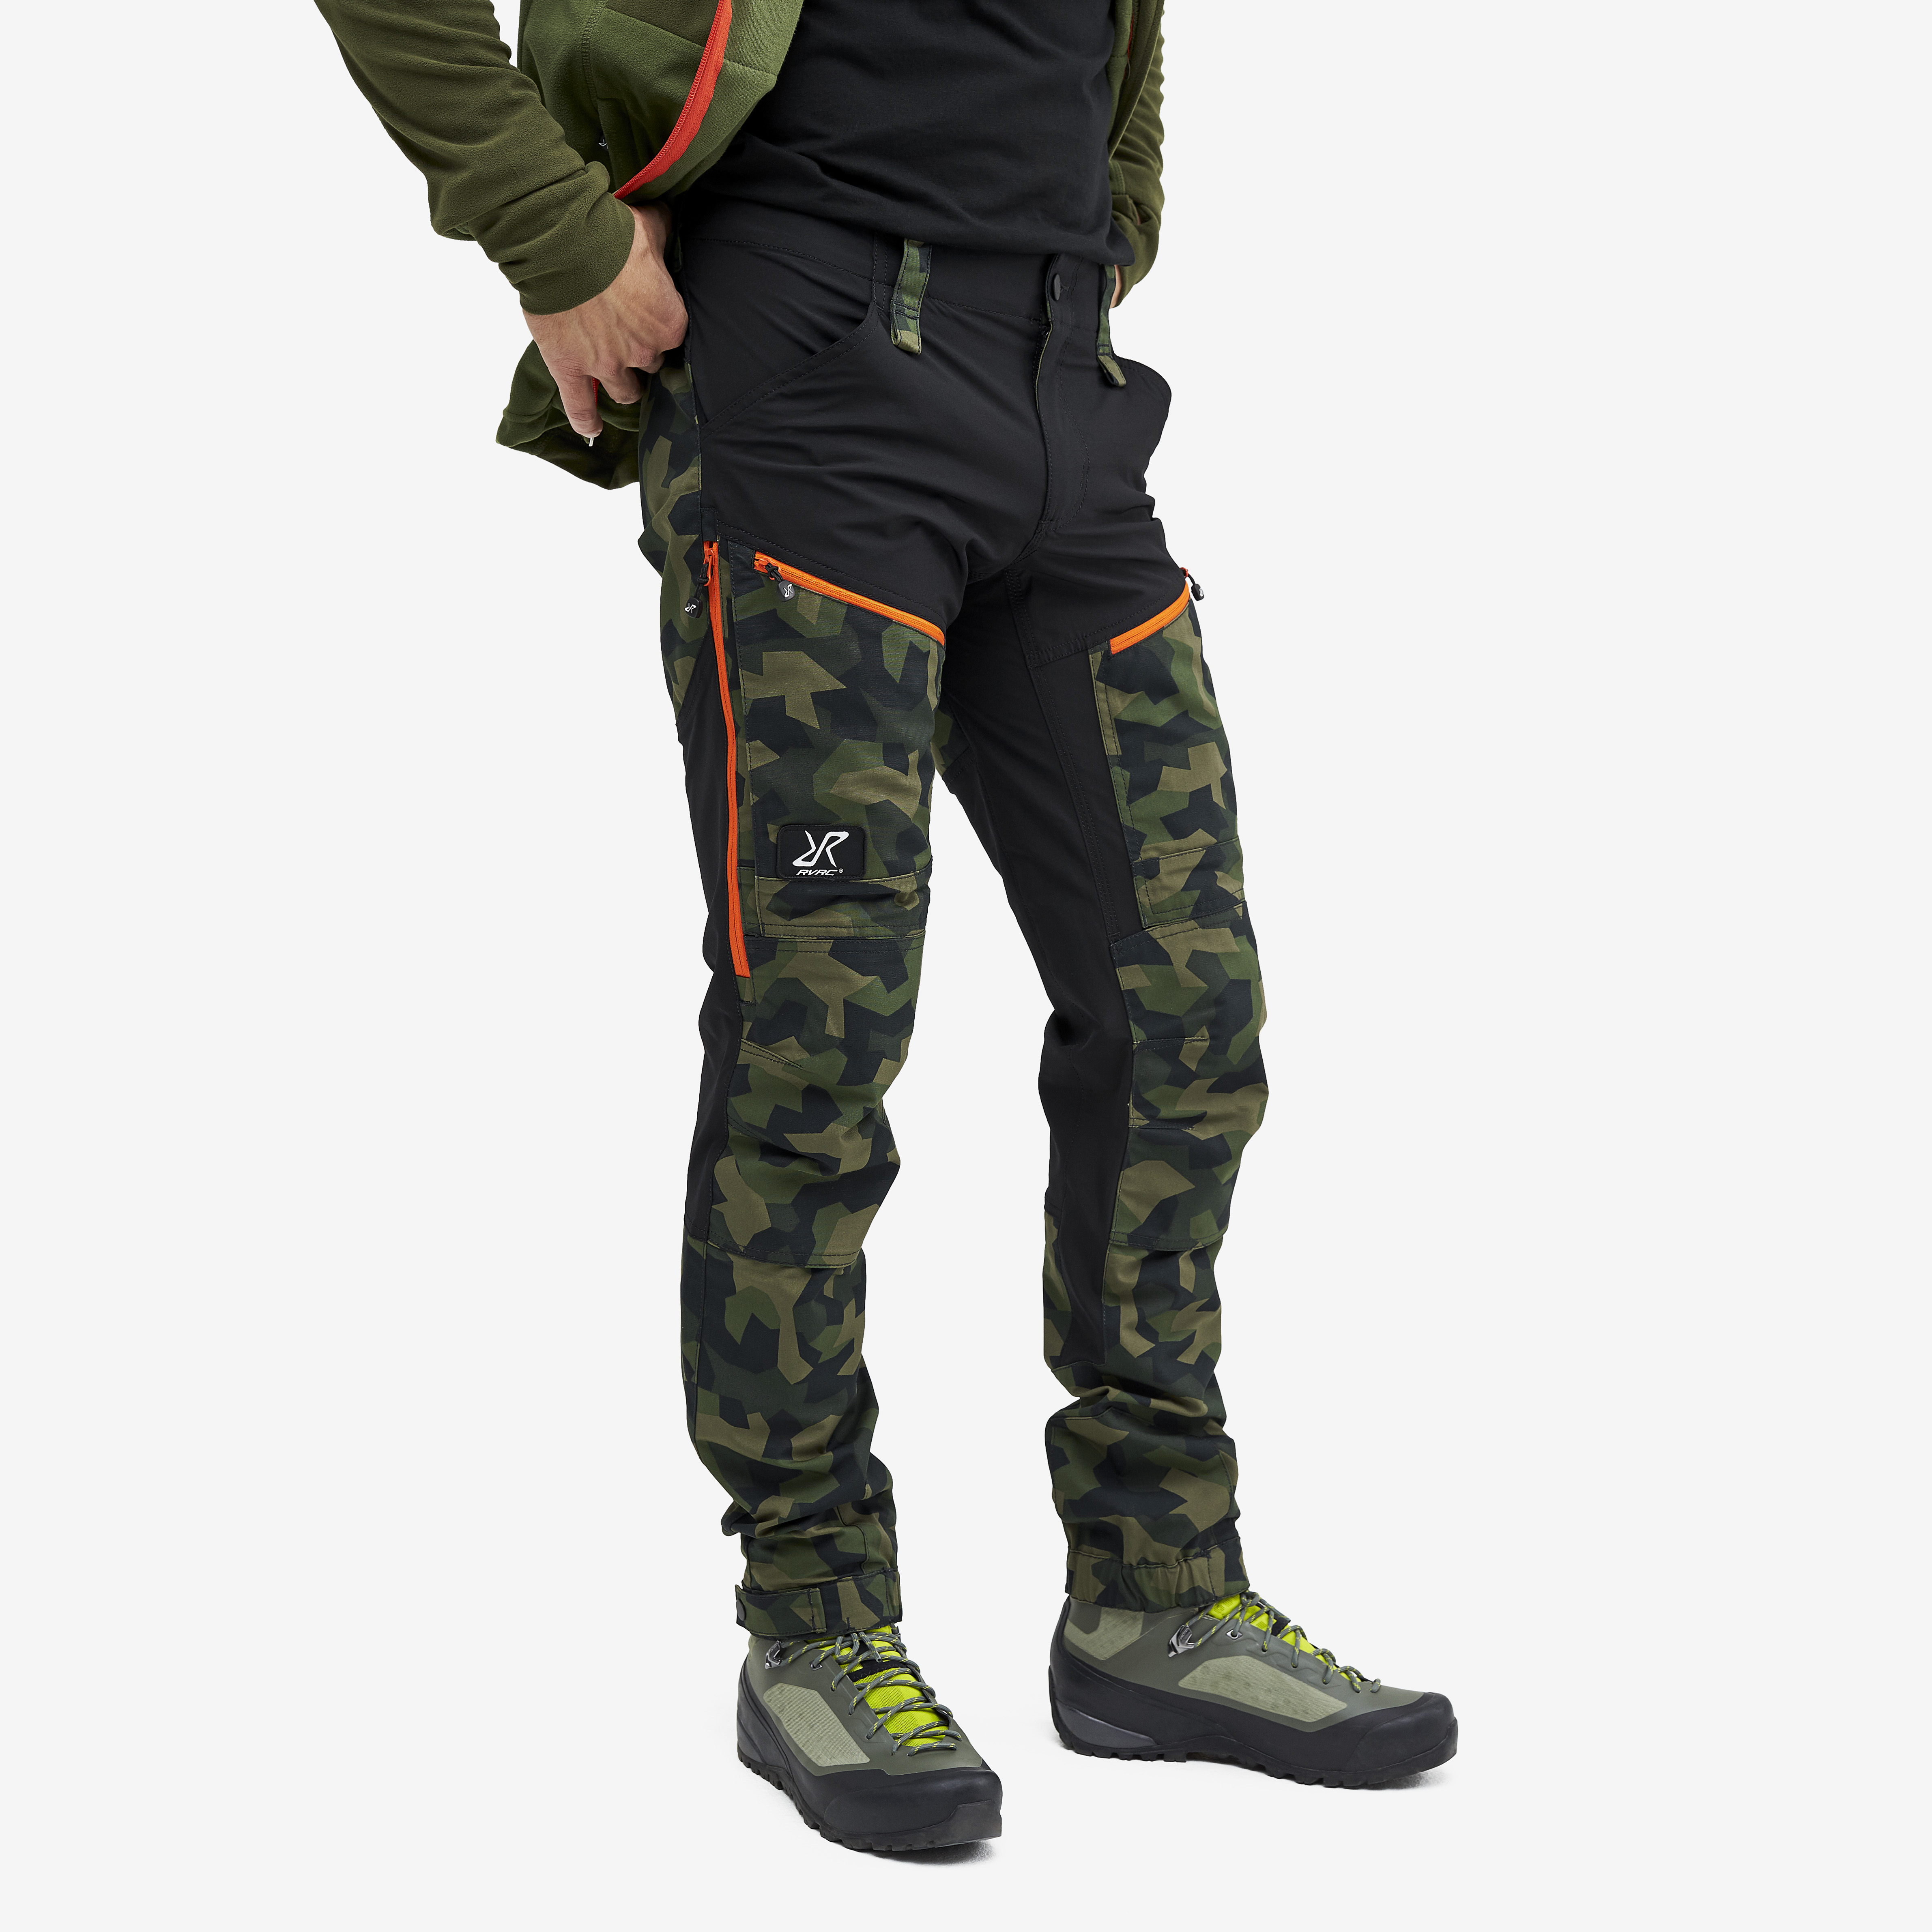 RVRC GP Pro hiking pants for men in green